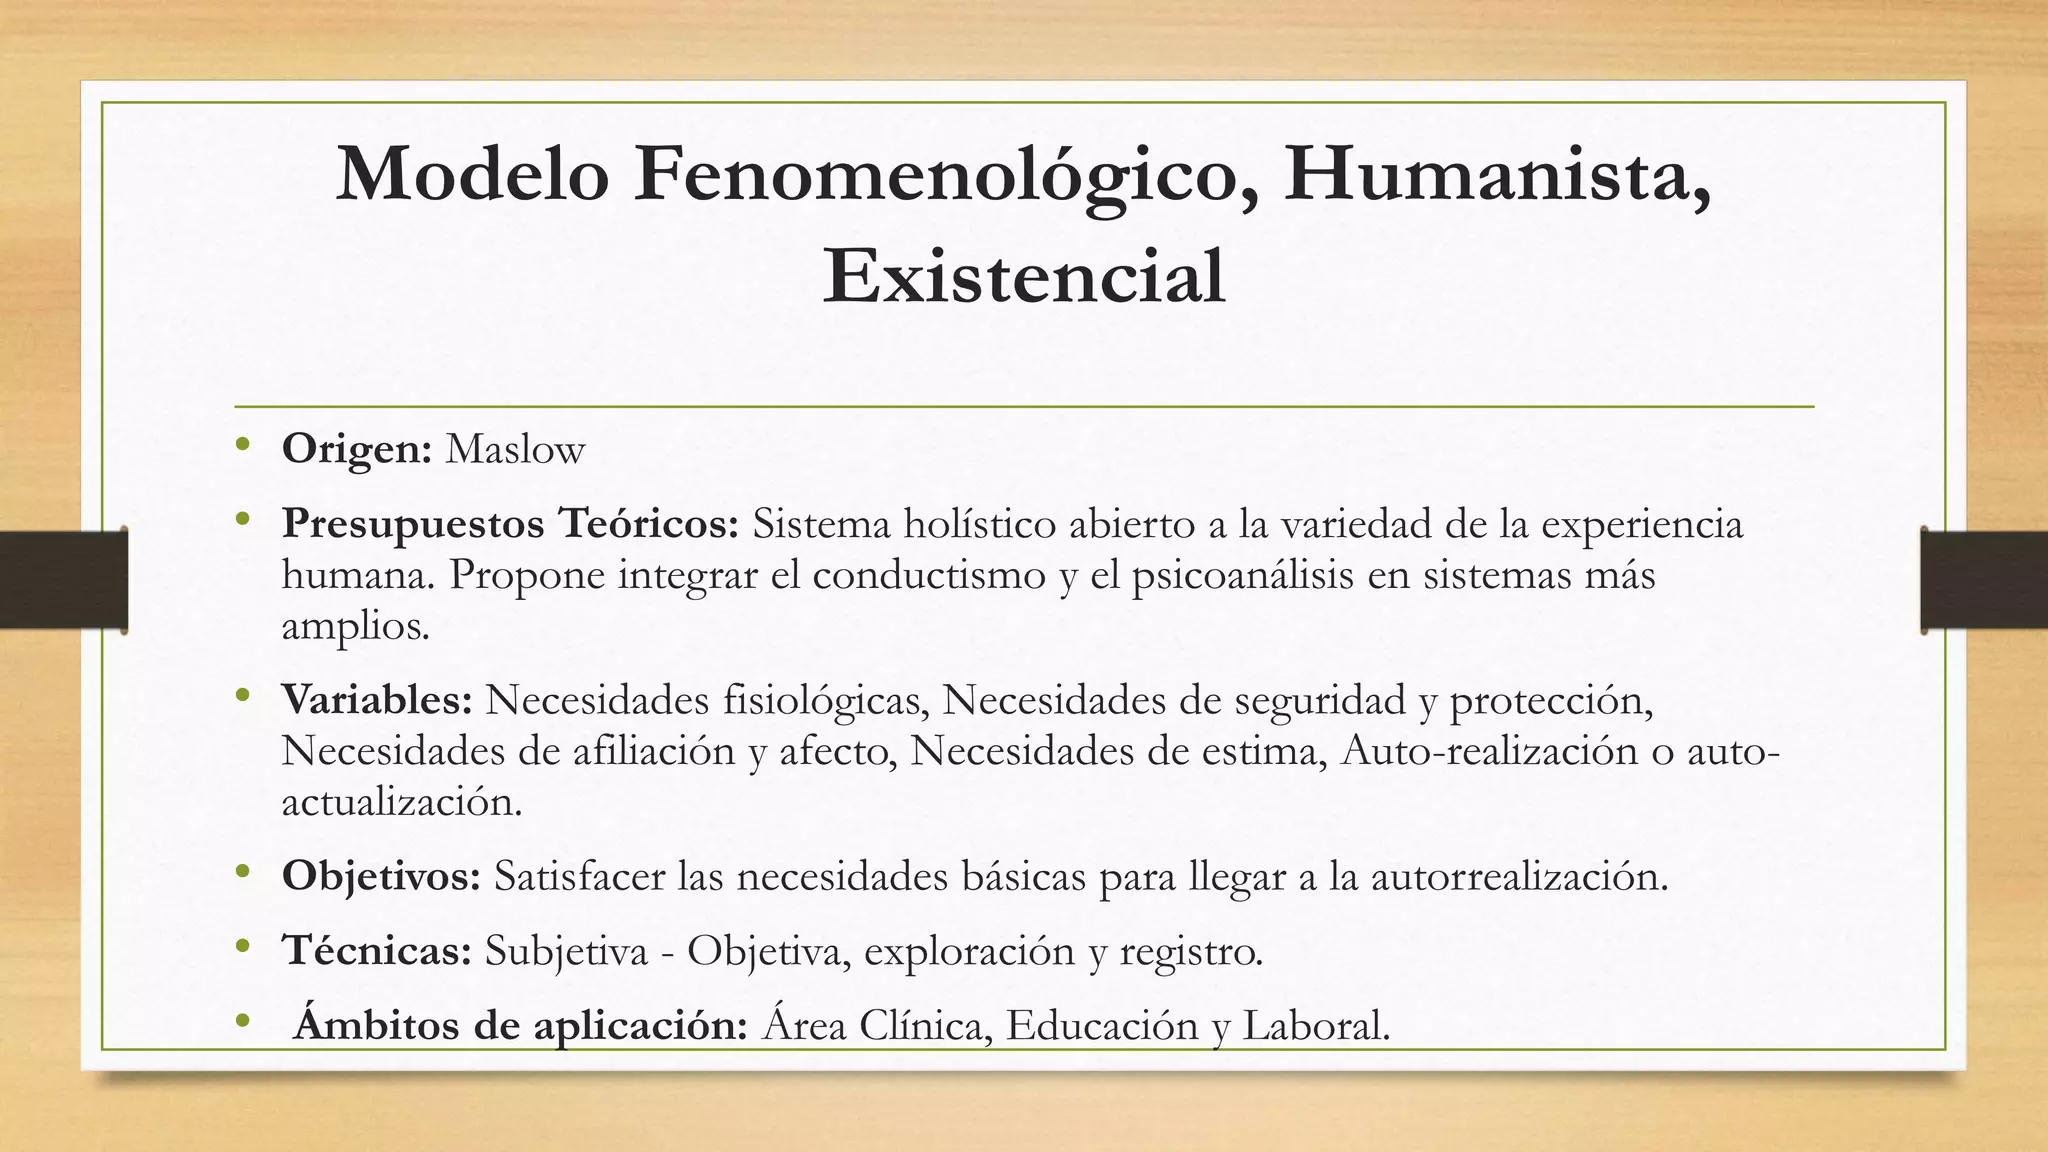 Modelo Fenomenologico Humanista de Maslow